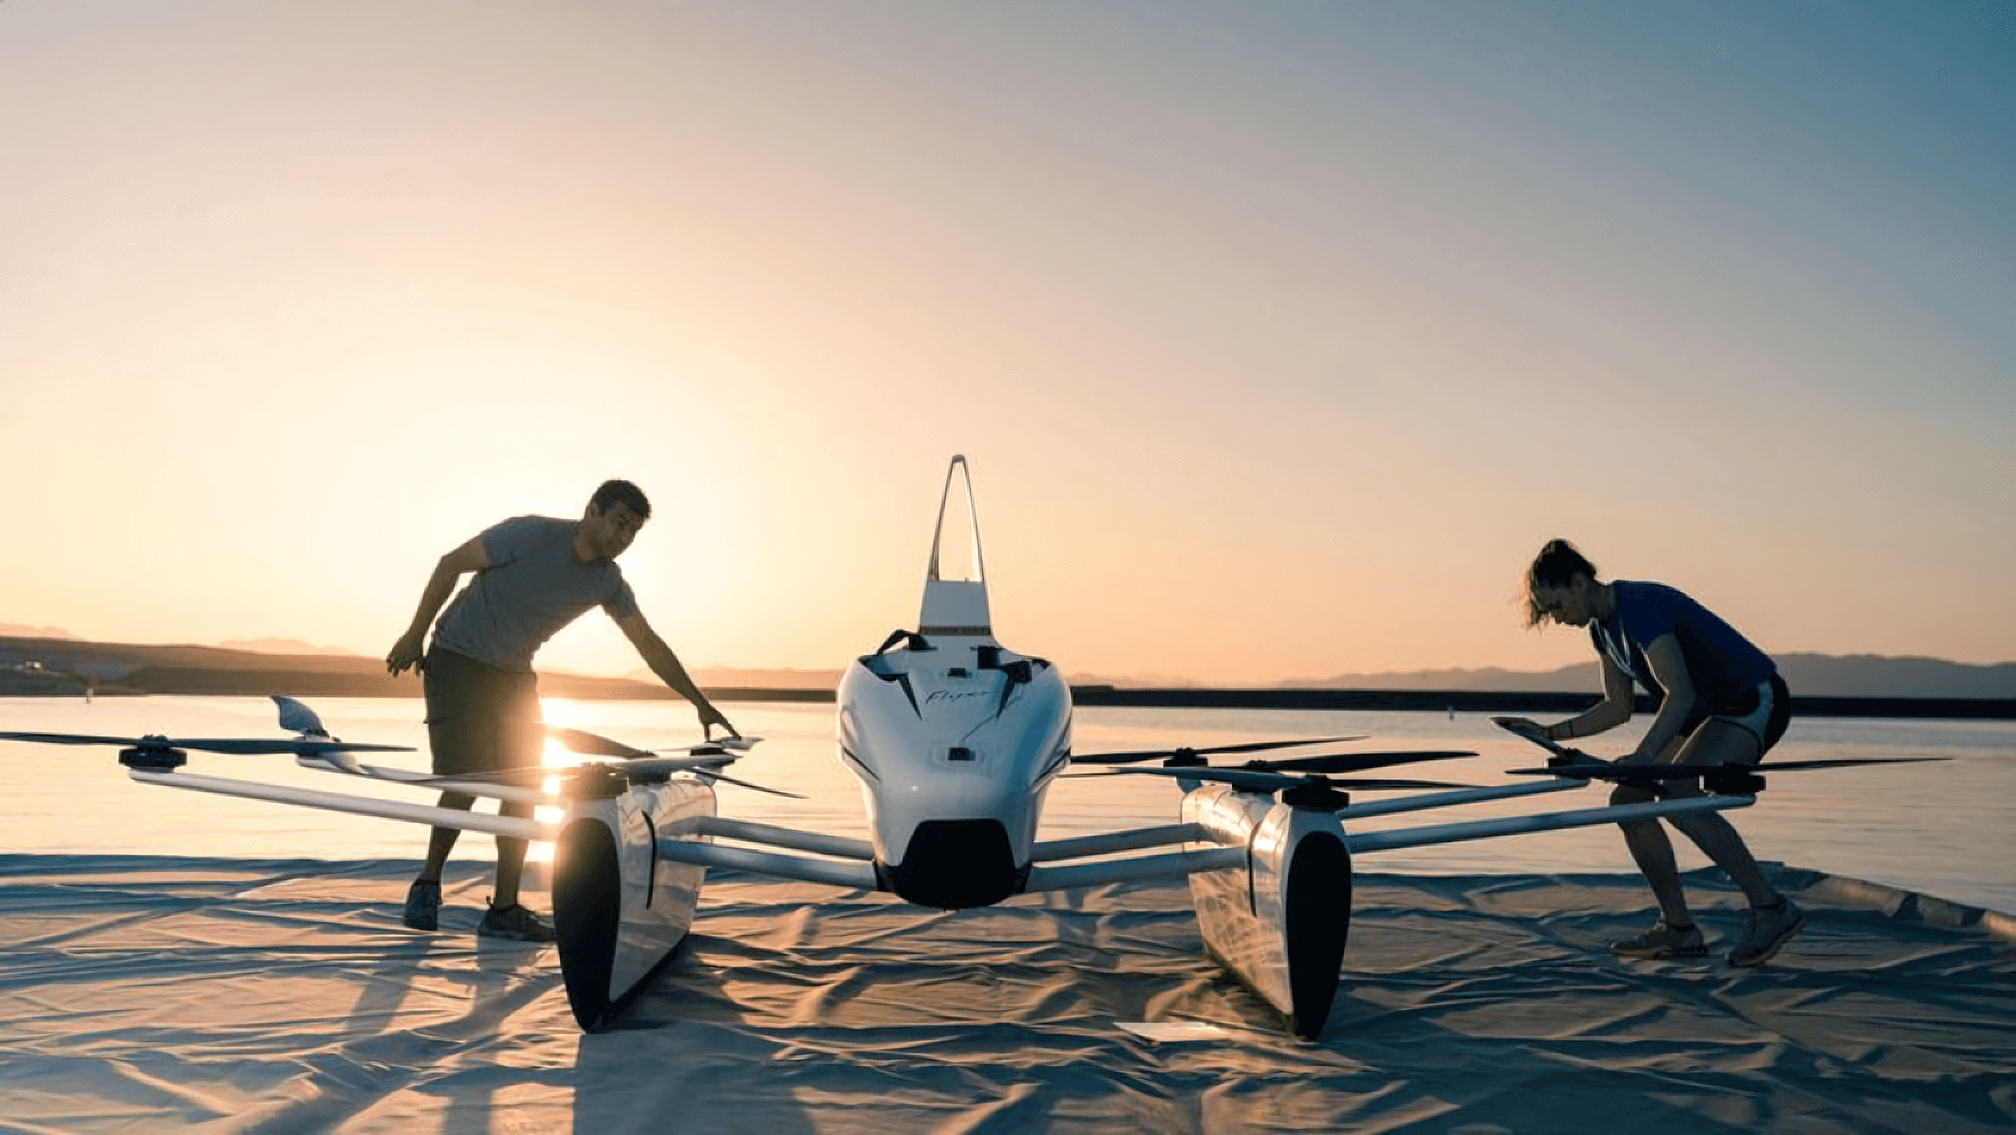 Kitty Hawk halts work on original flying car project